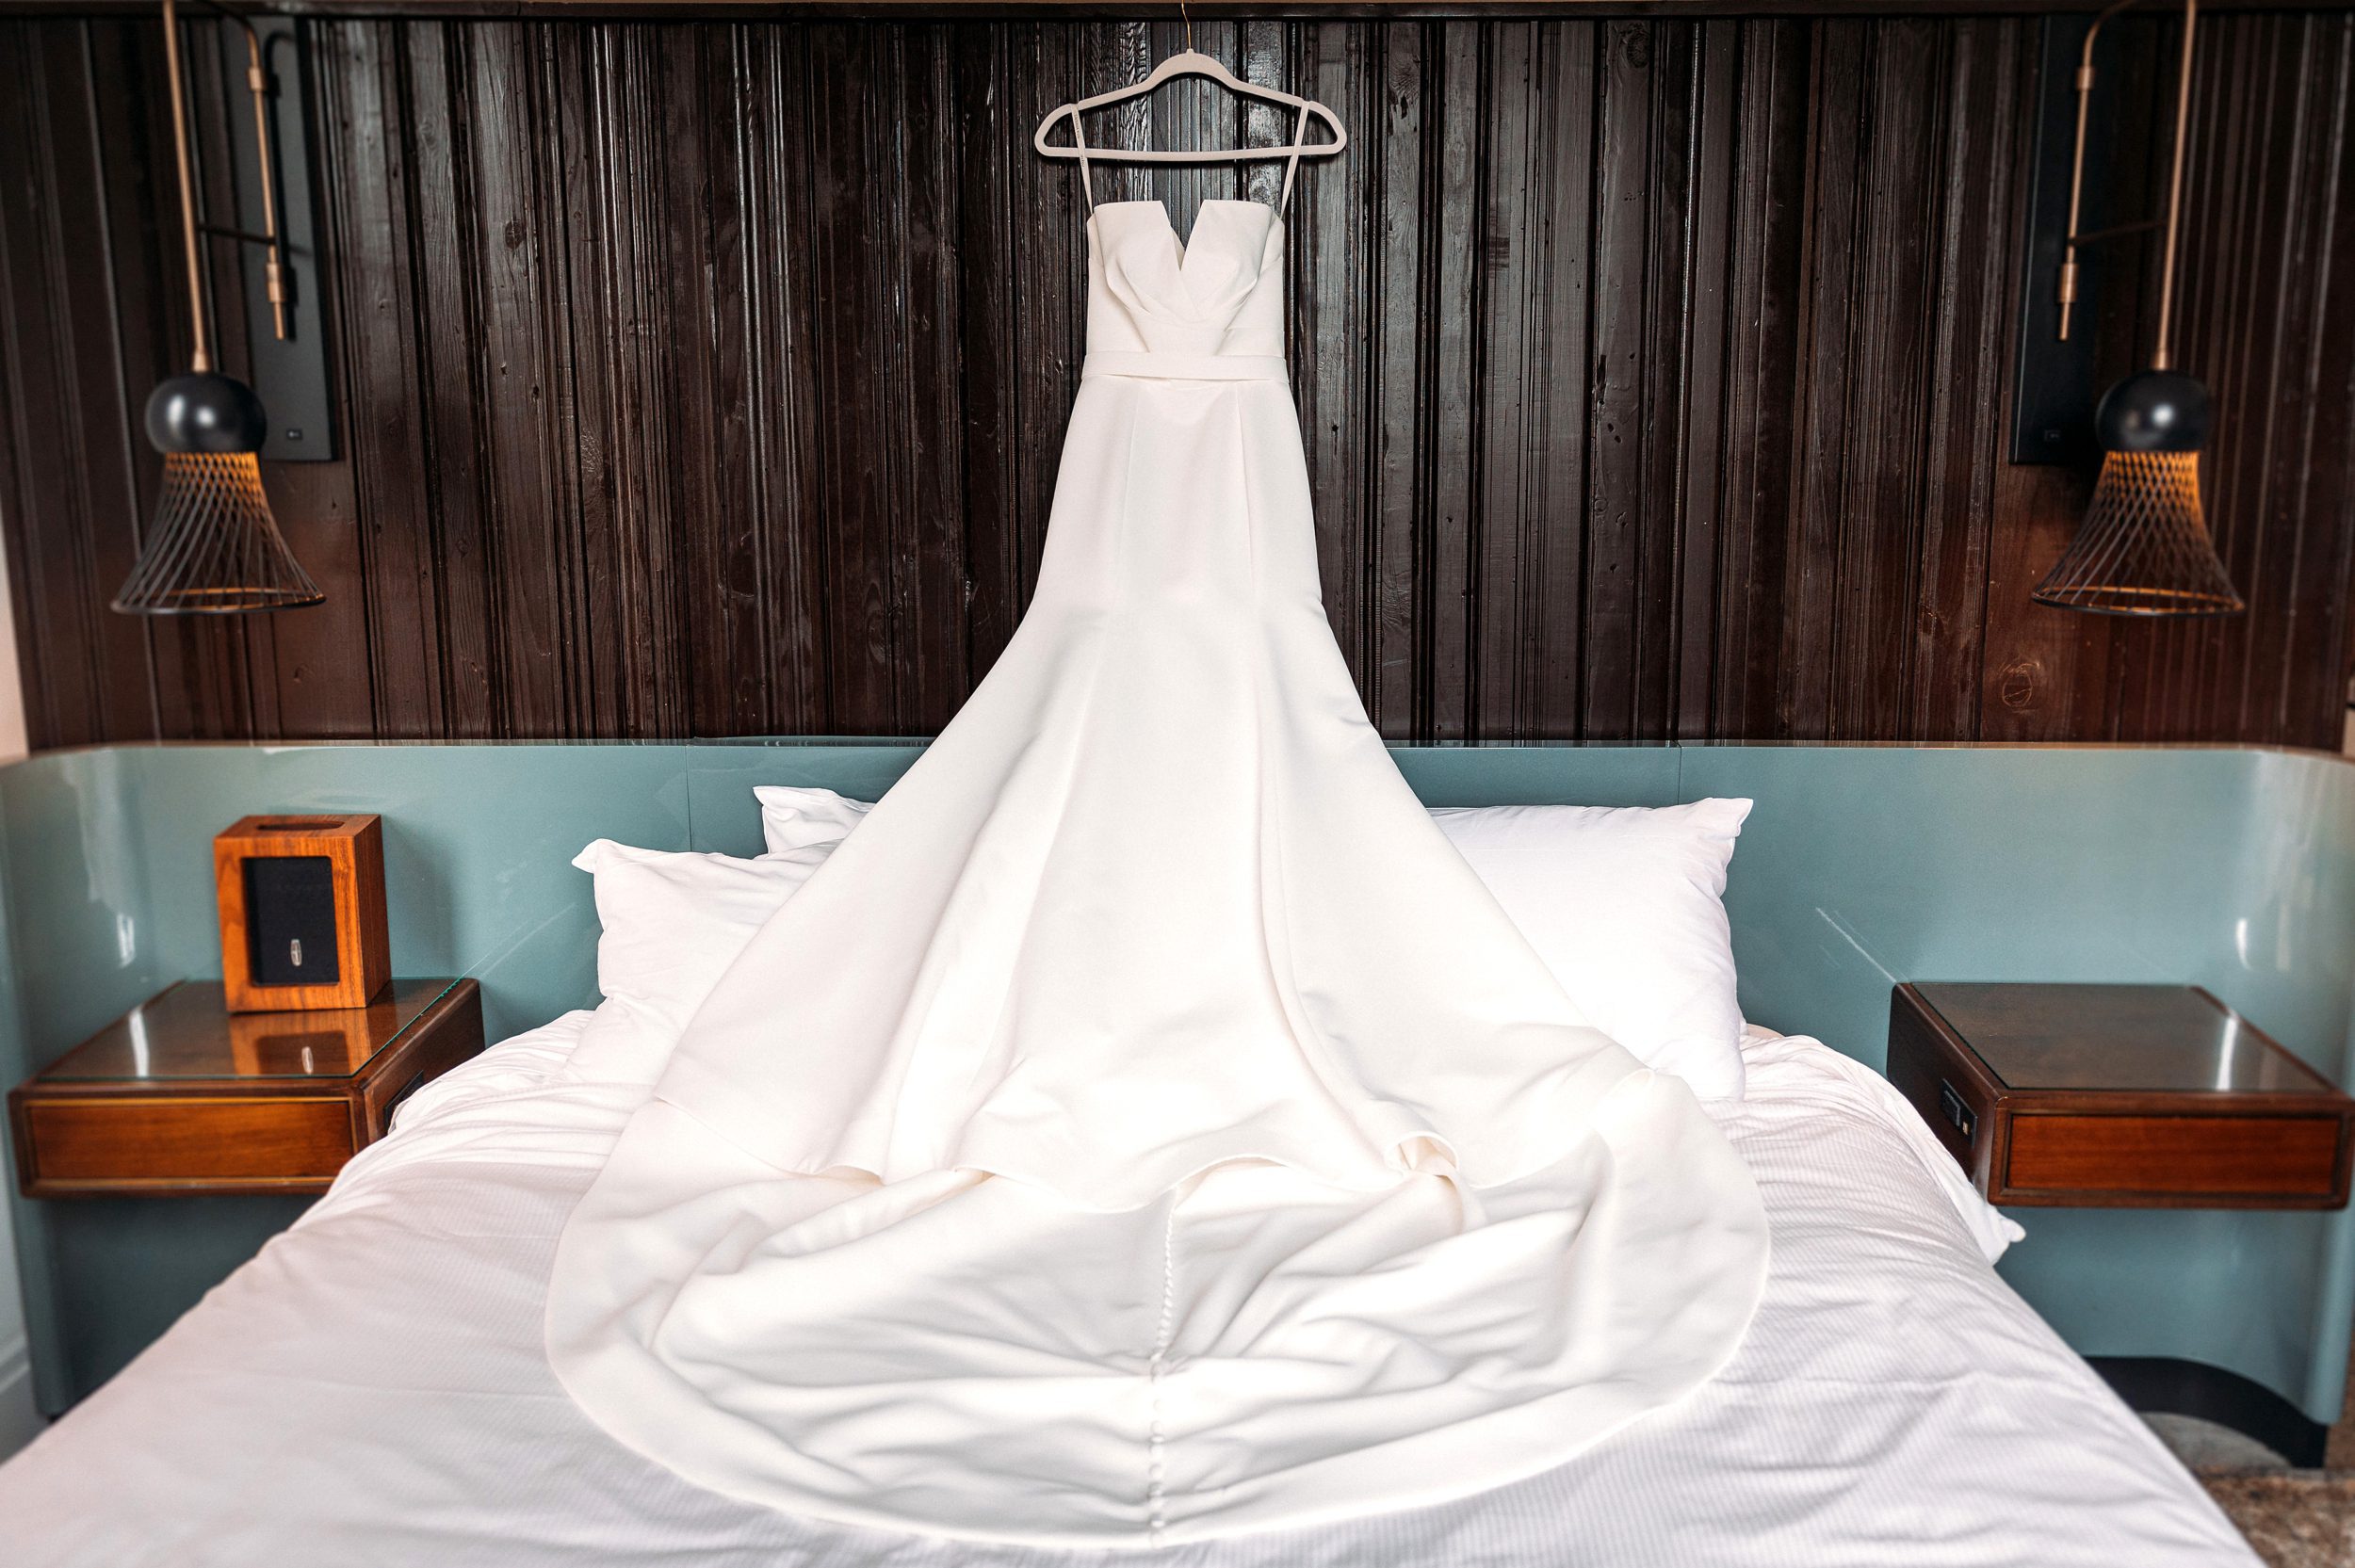 Wedding dress hanging above bed.